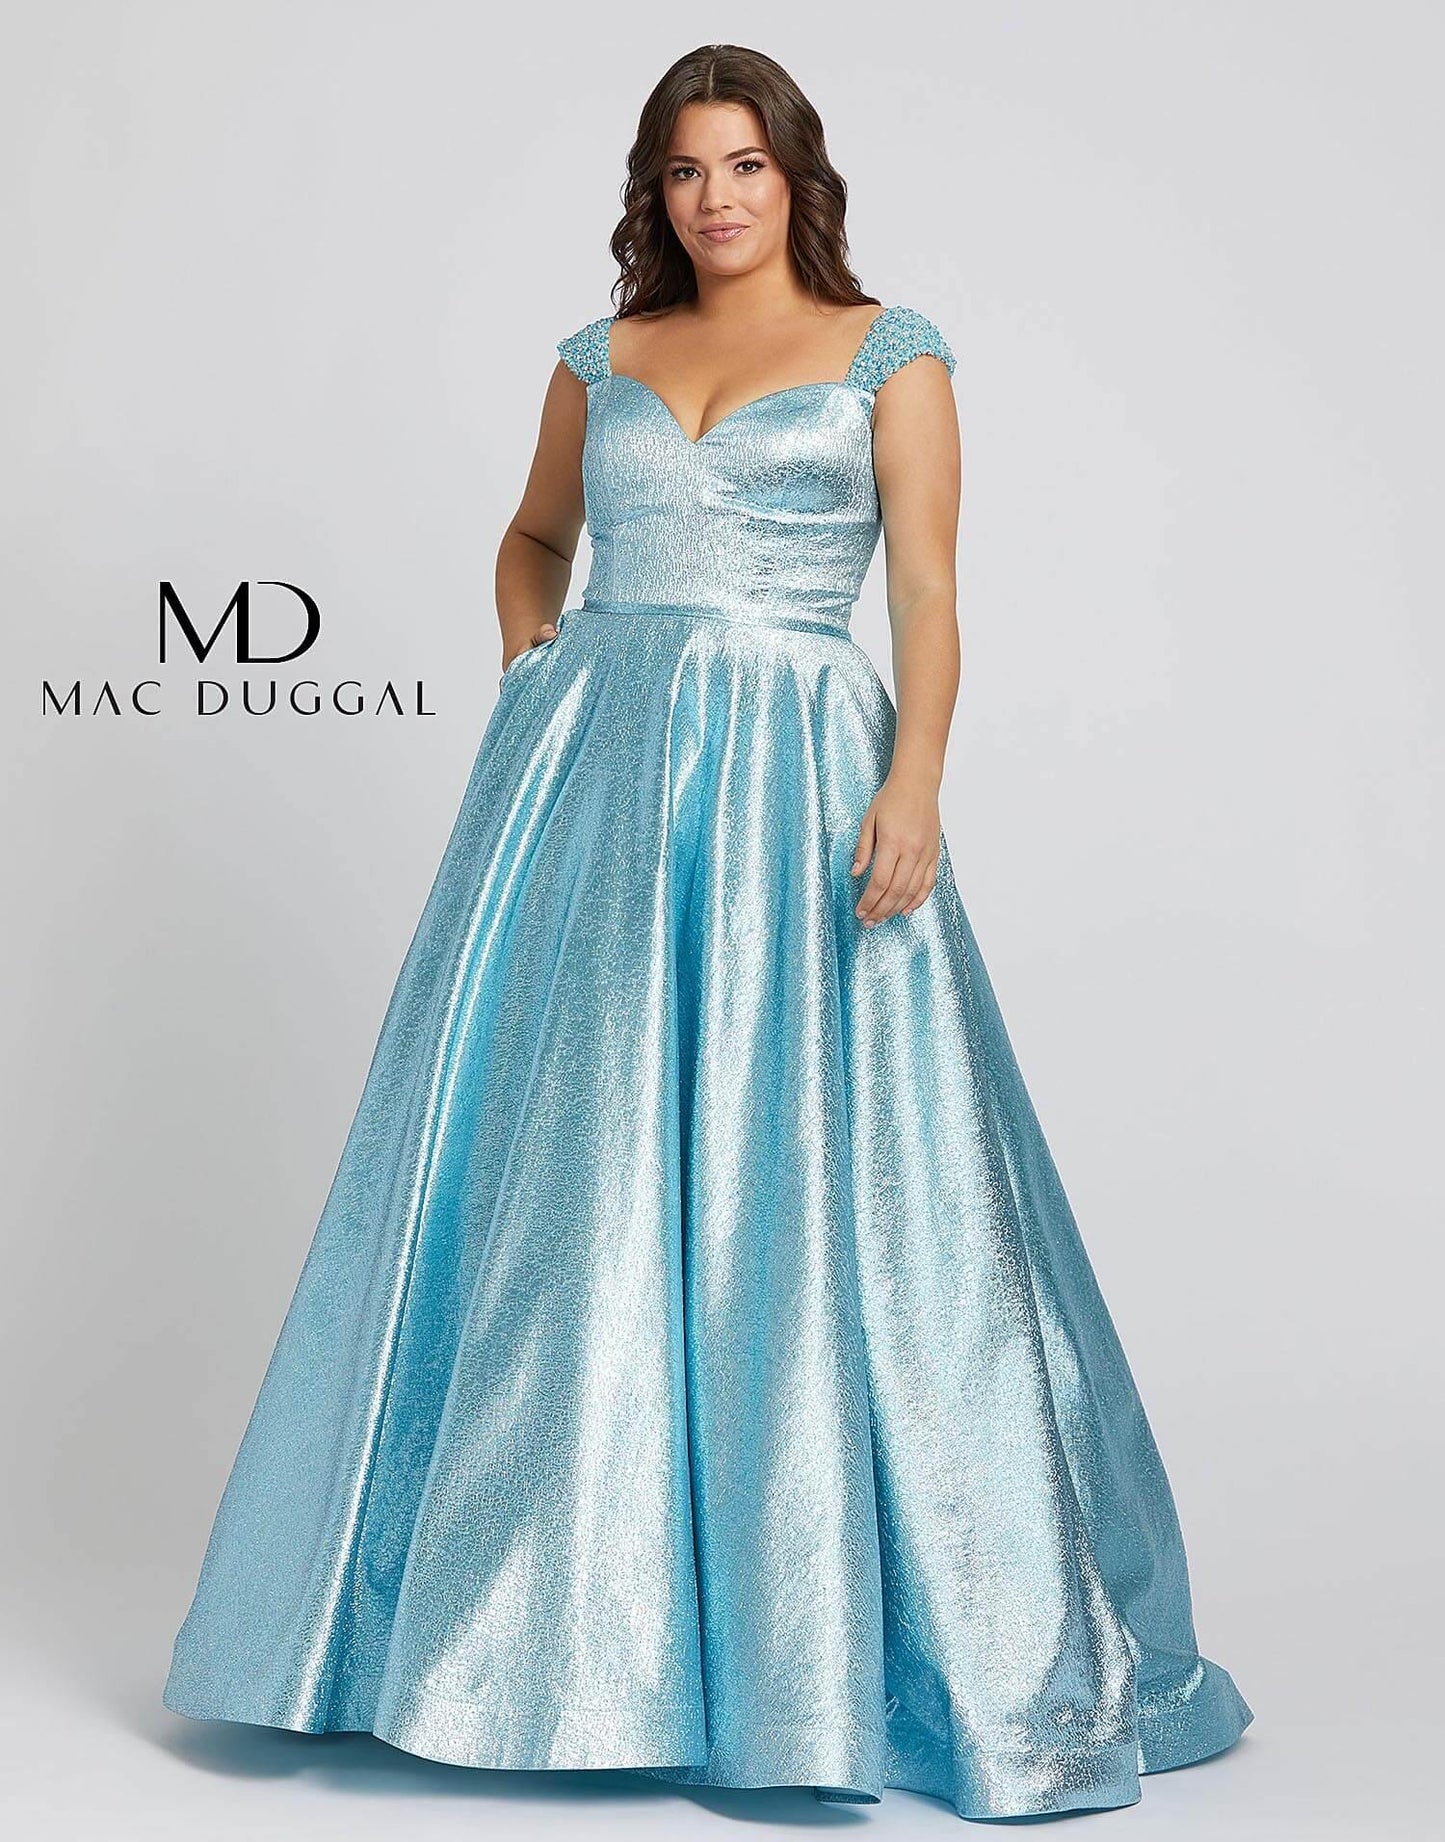 Mac Duggal Fabulouss Plus Size Prom Long Ball Gown 67236F - The Dress Outlet Mac Duggal